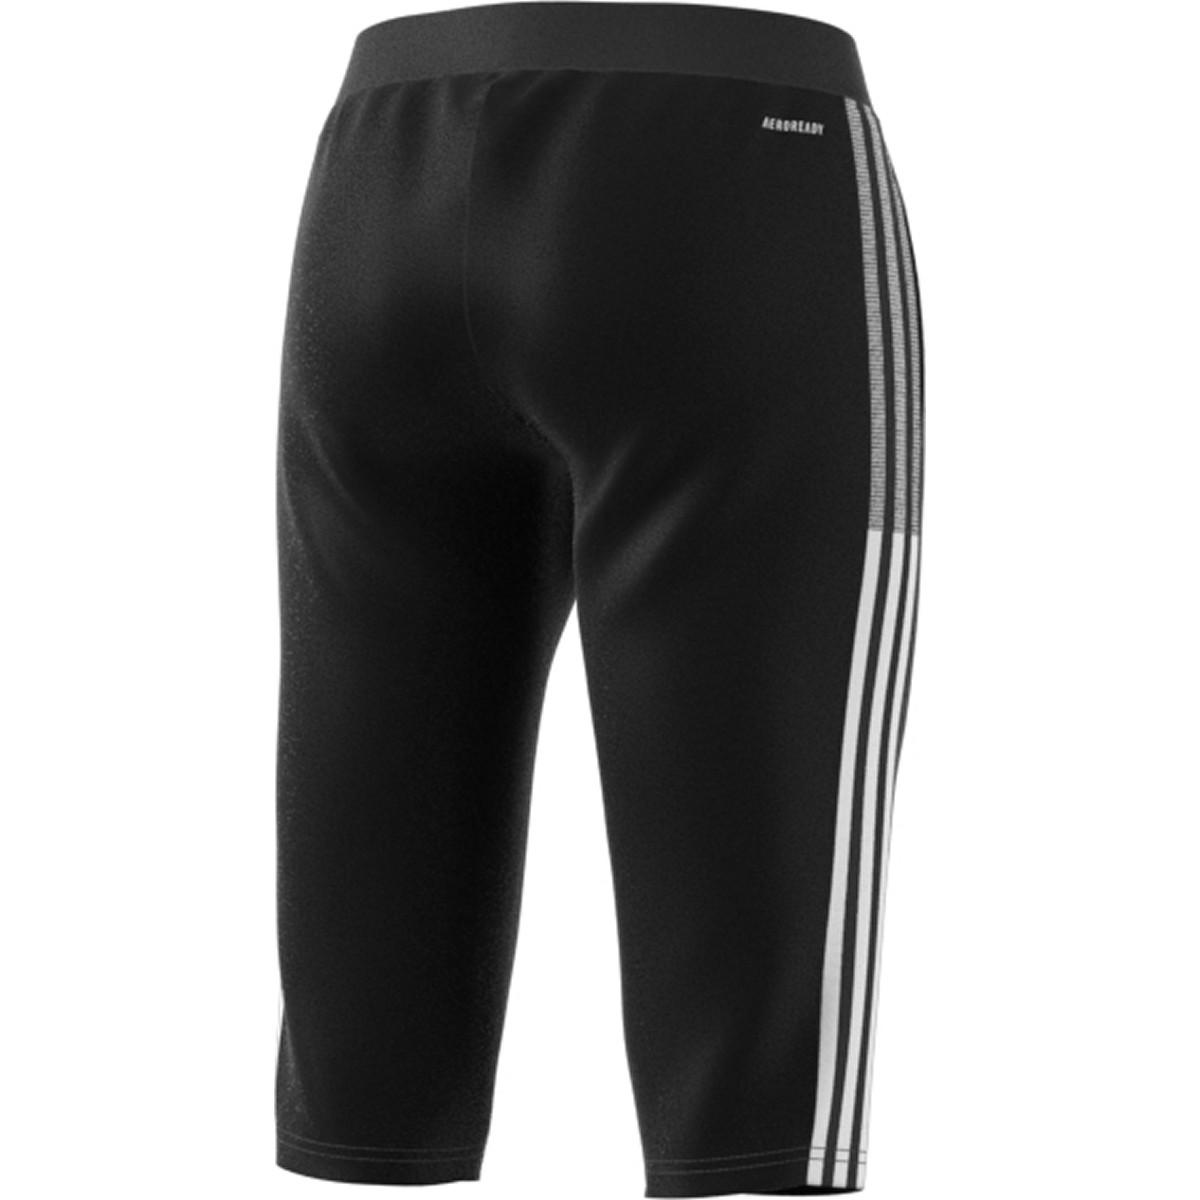 Adidas Womens Tiro 21 Track Pants Black/White Large